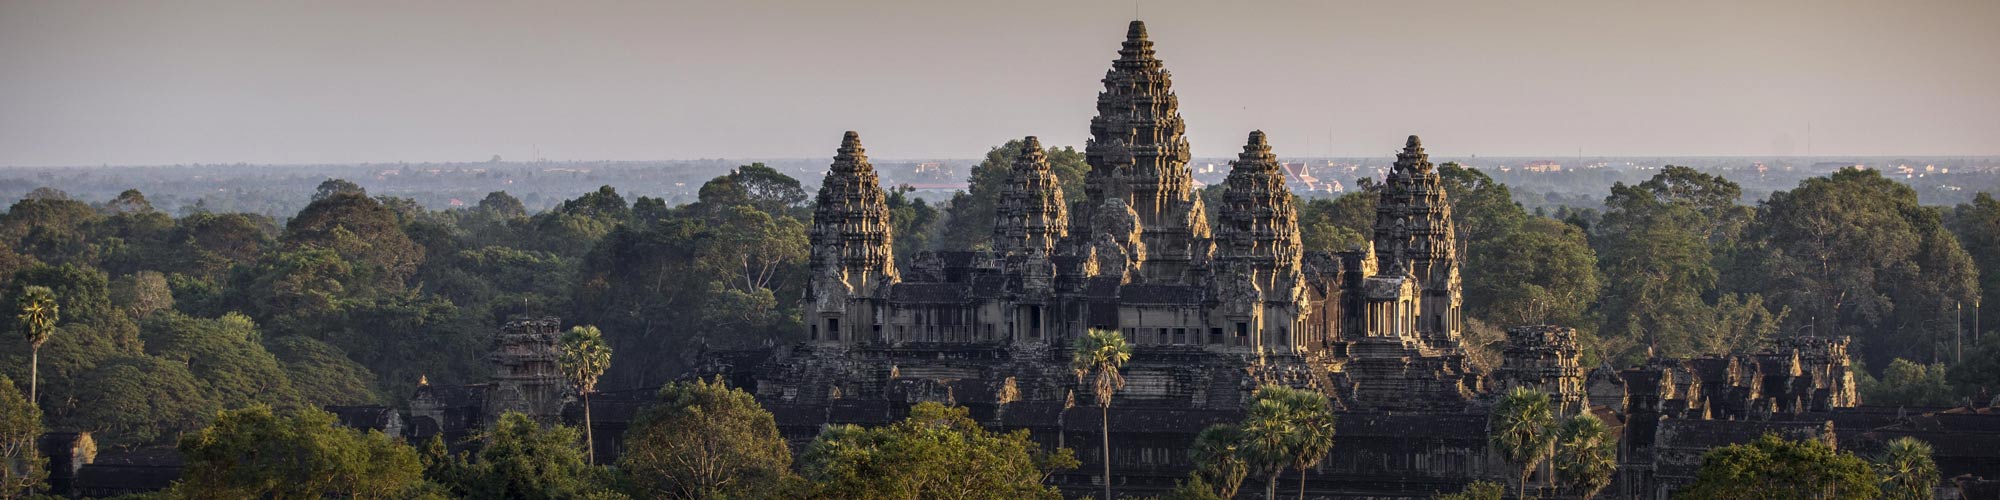 Voyage sur mesure Cambodge © ARTHUS-BERTRAND Yann / hemis.fr